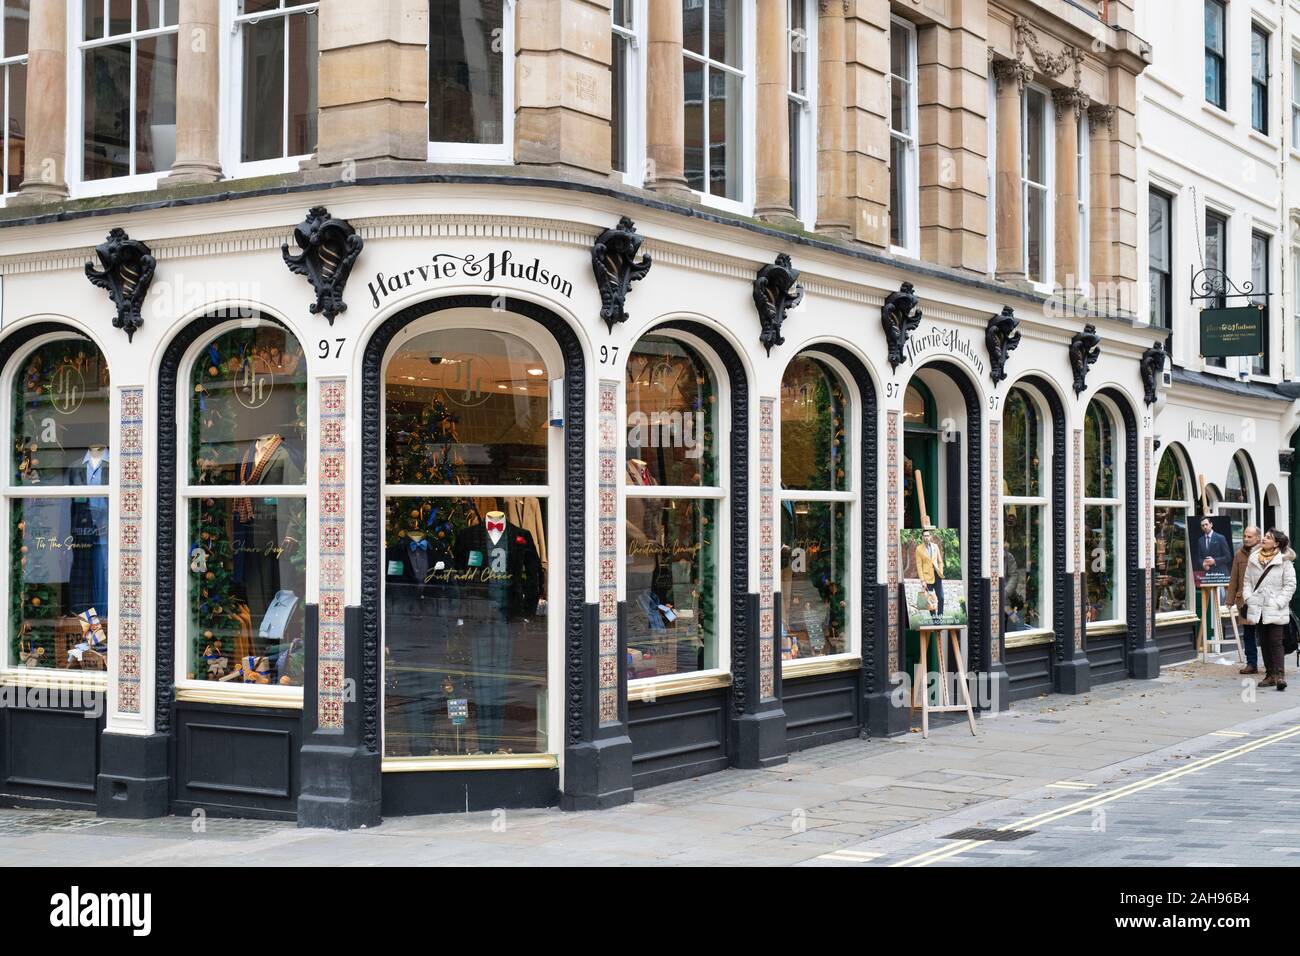 Harvie and Hudson tailors shop. Jermyn Street, St James's, London, England Stock Photo